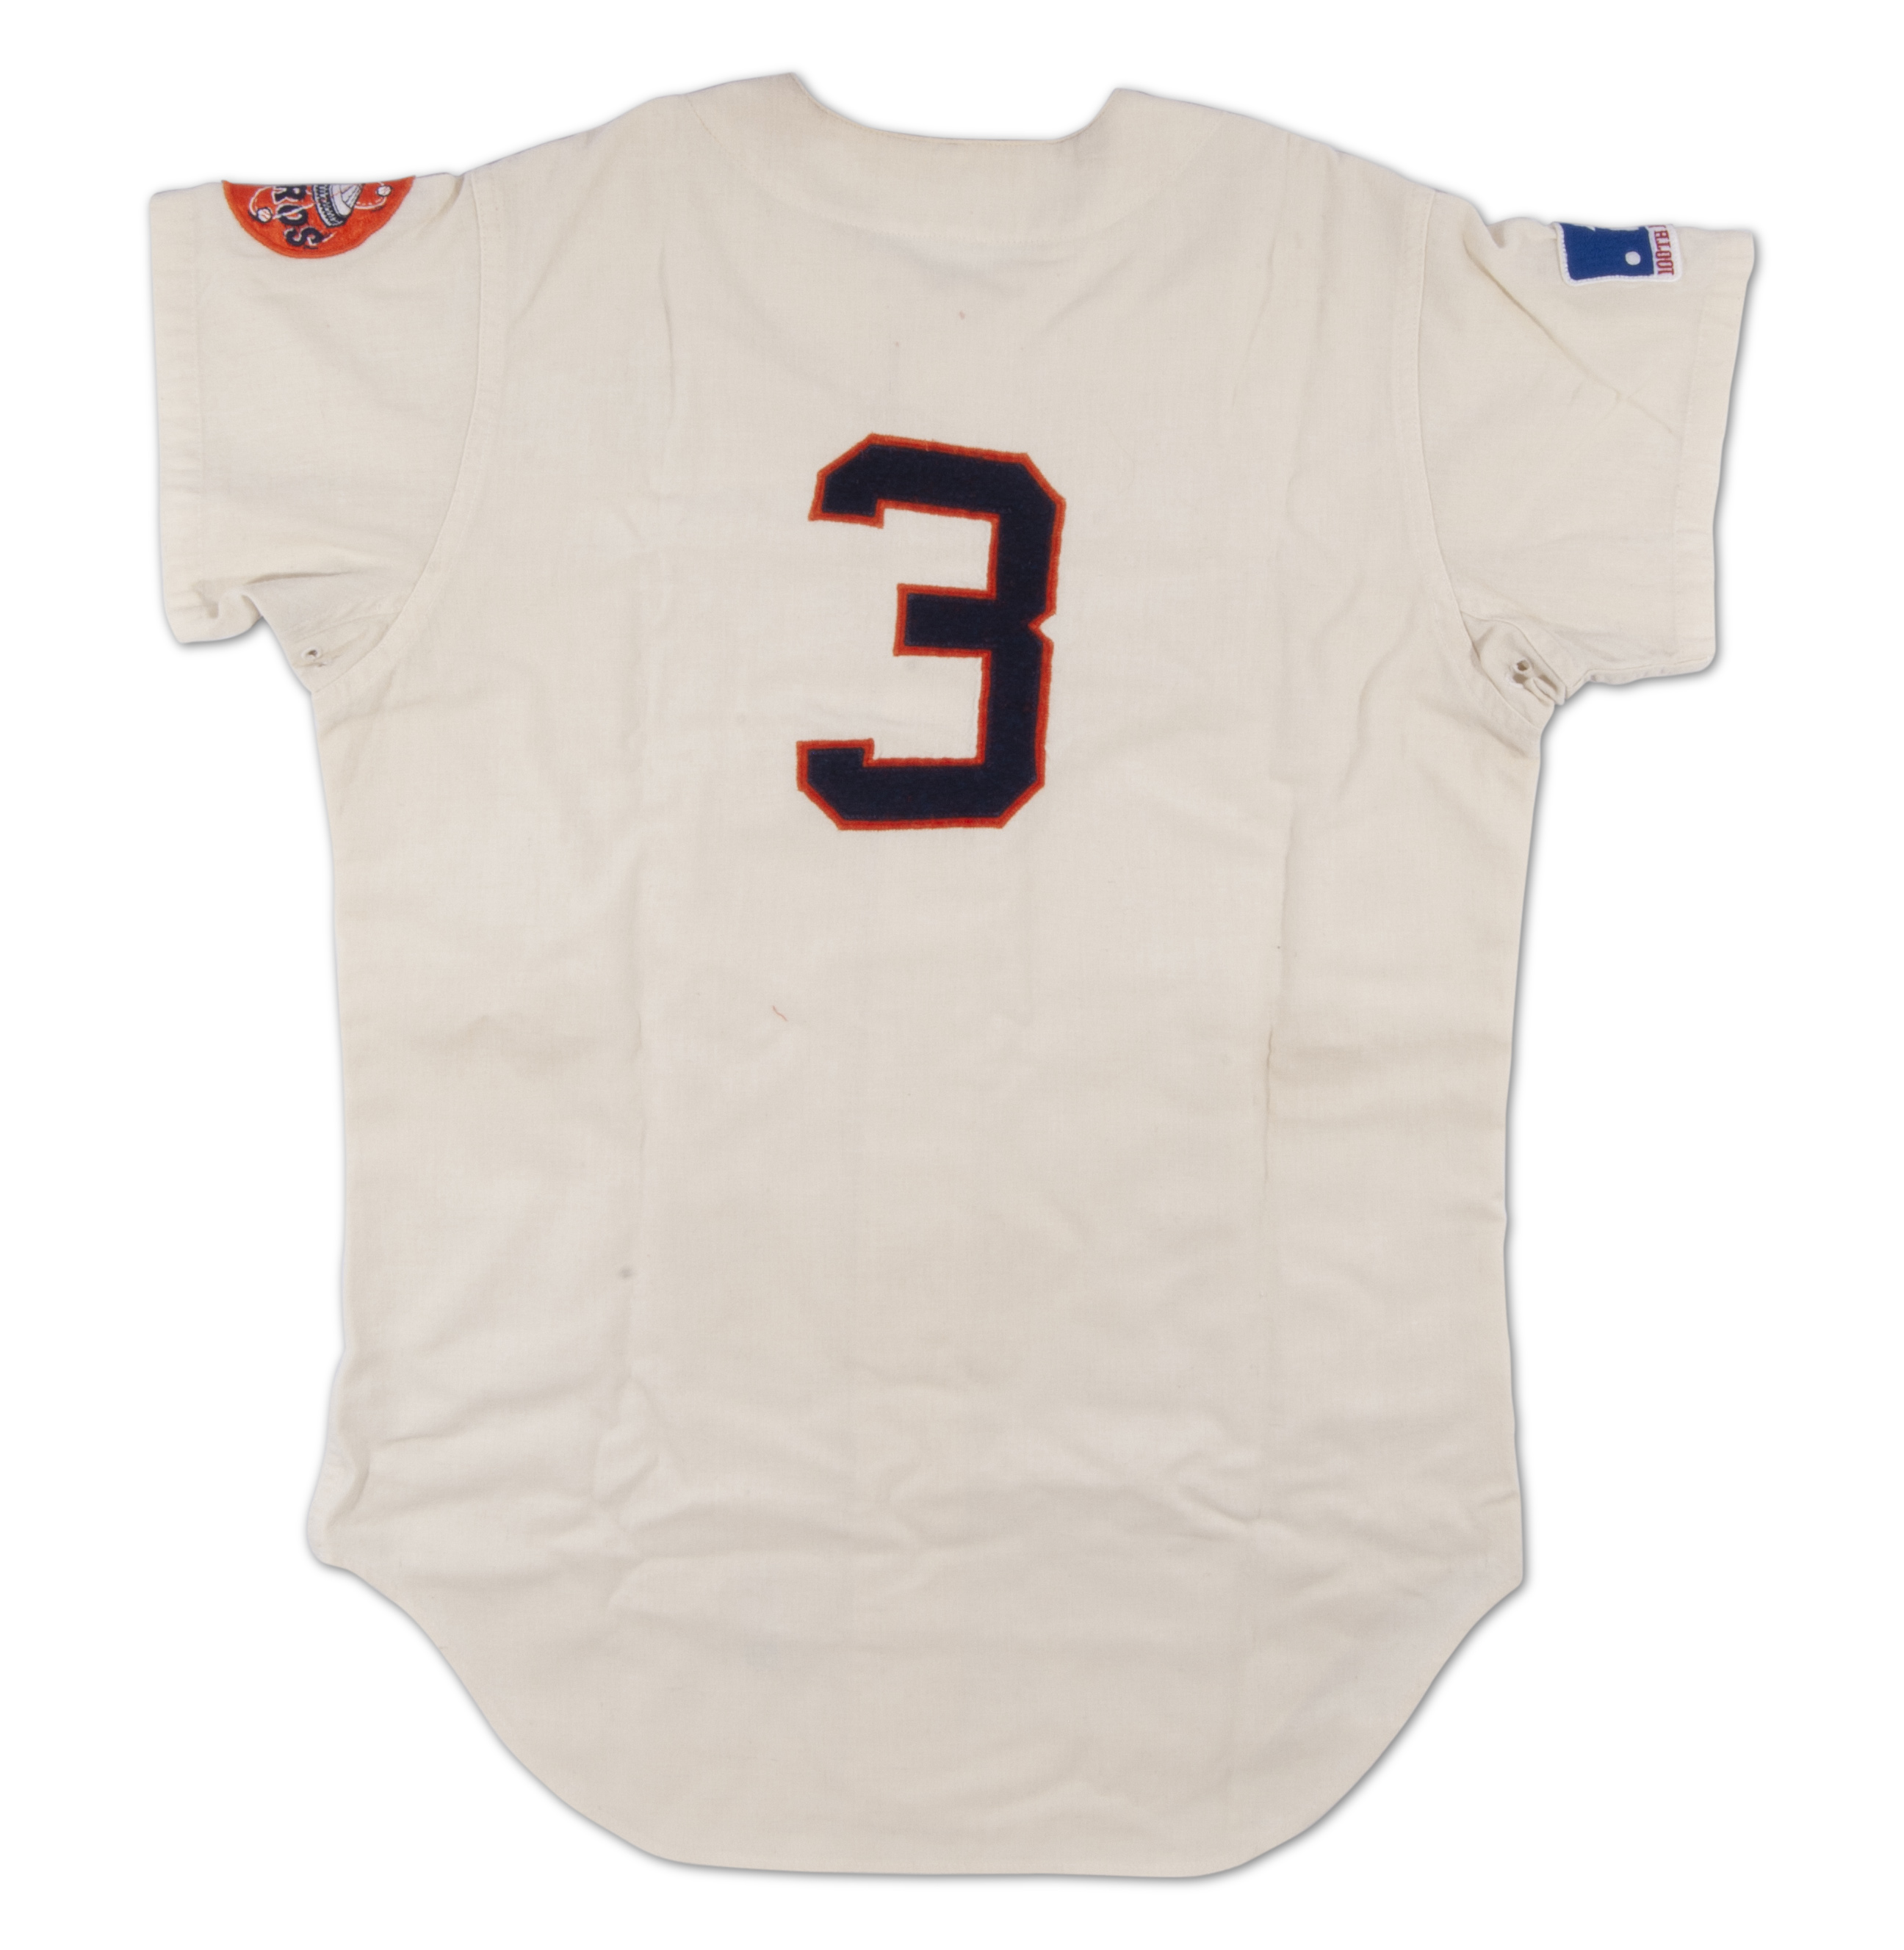 Astros jerseys (1962-present)